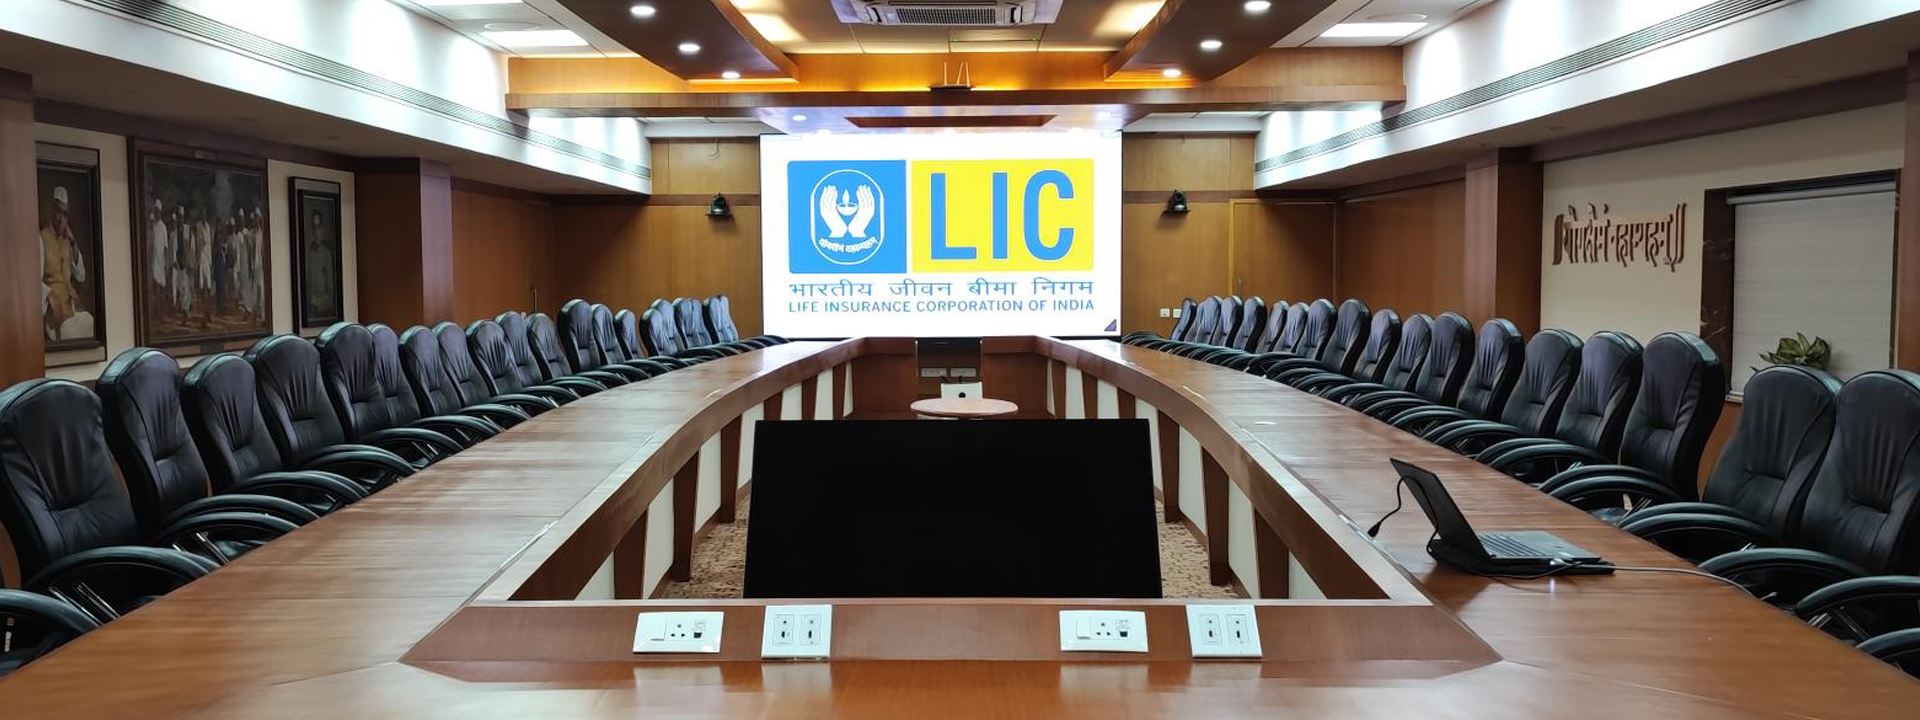 Boardroom Display solution in LIC 